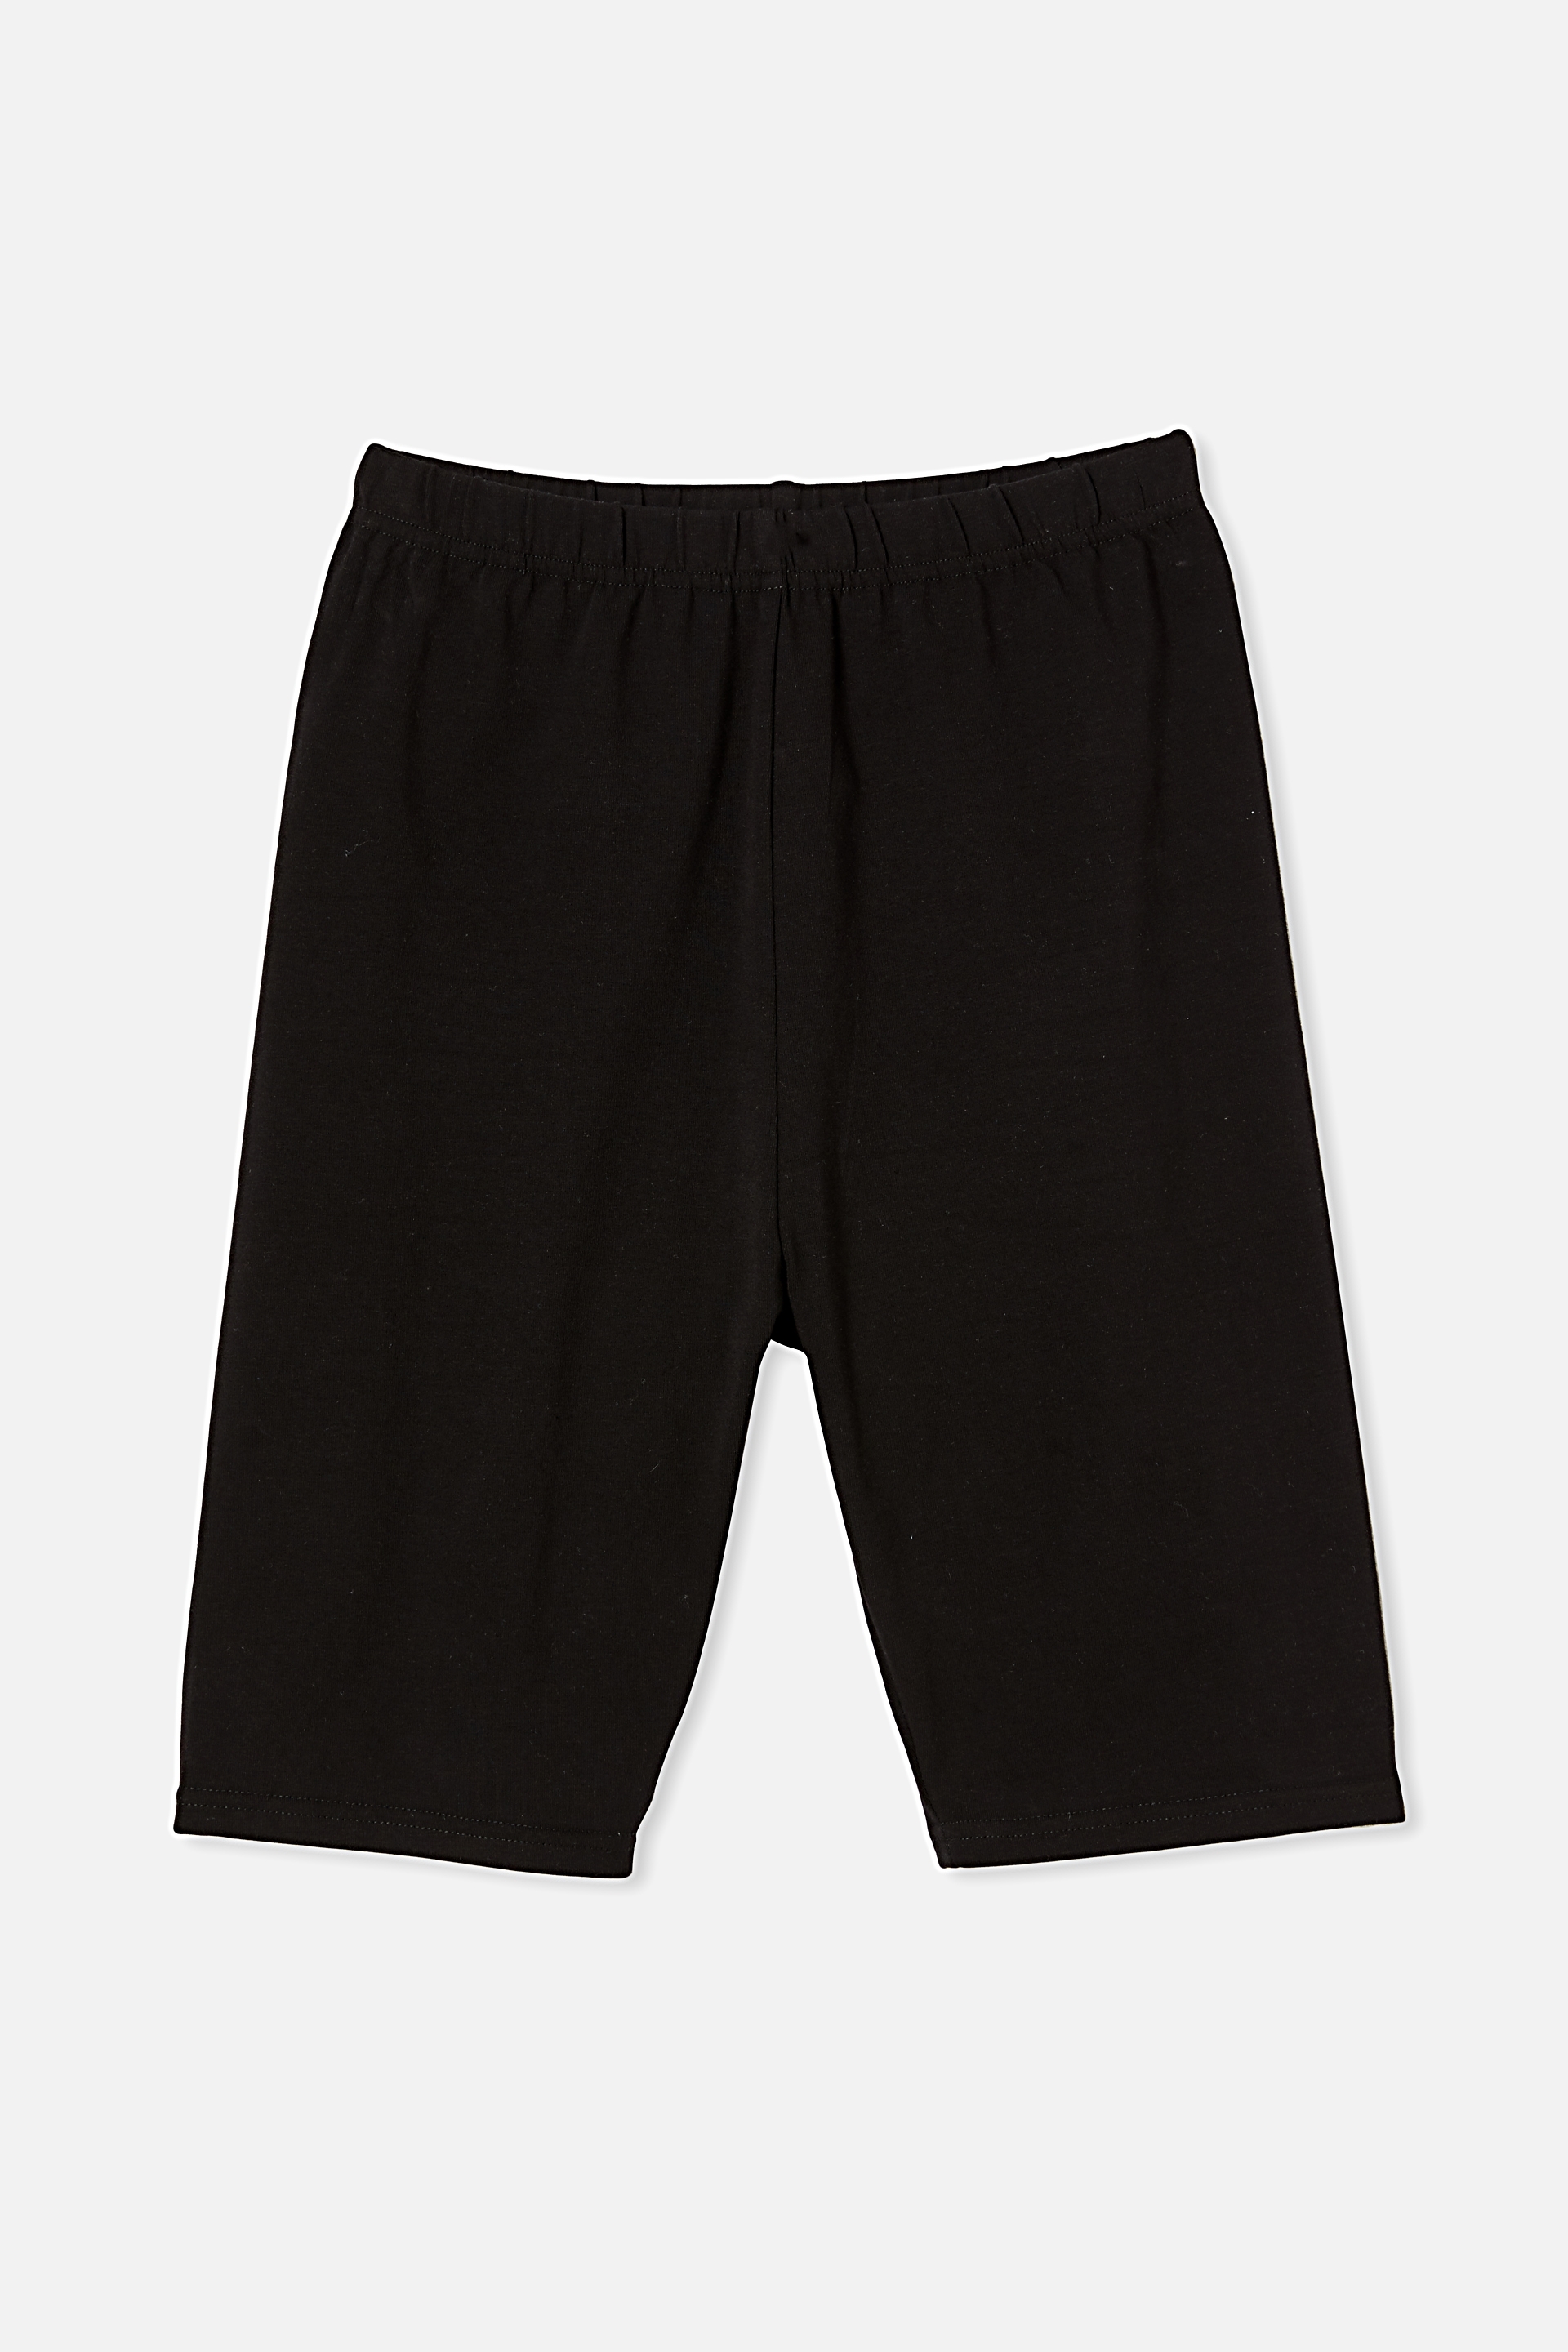 black cotton bike shorts